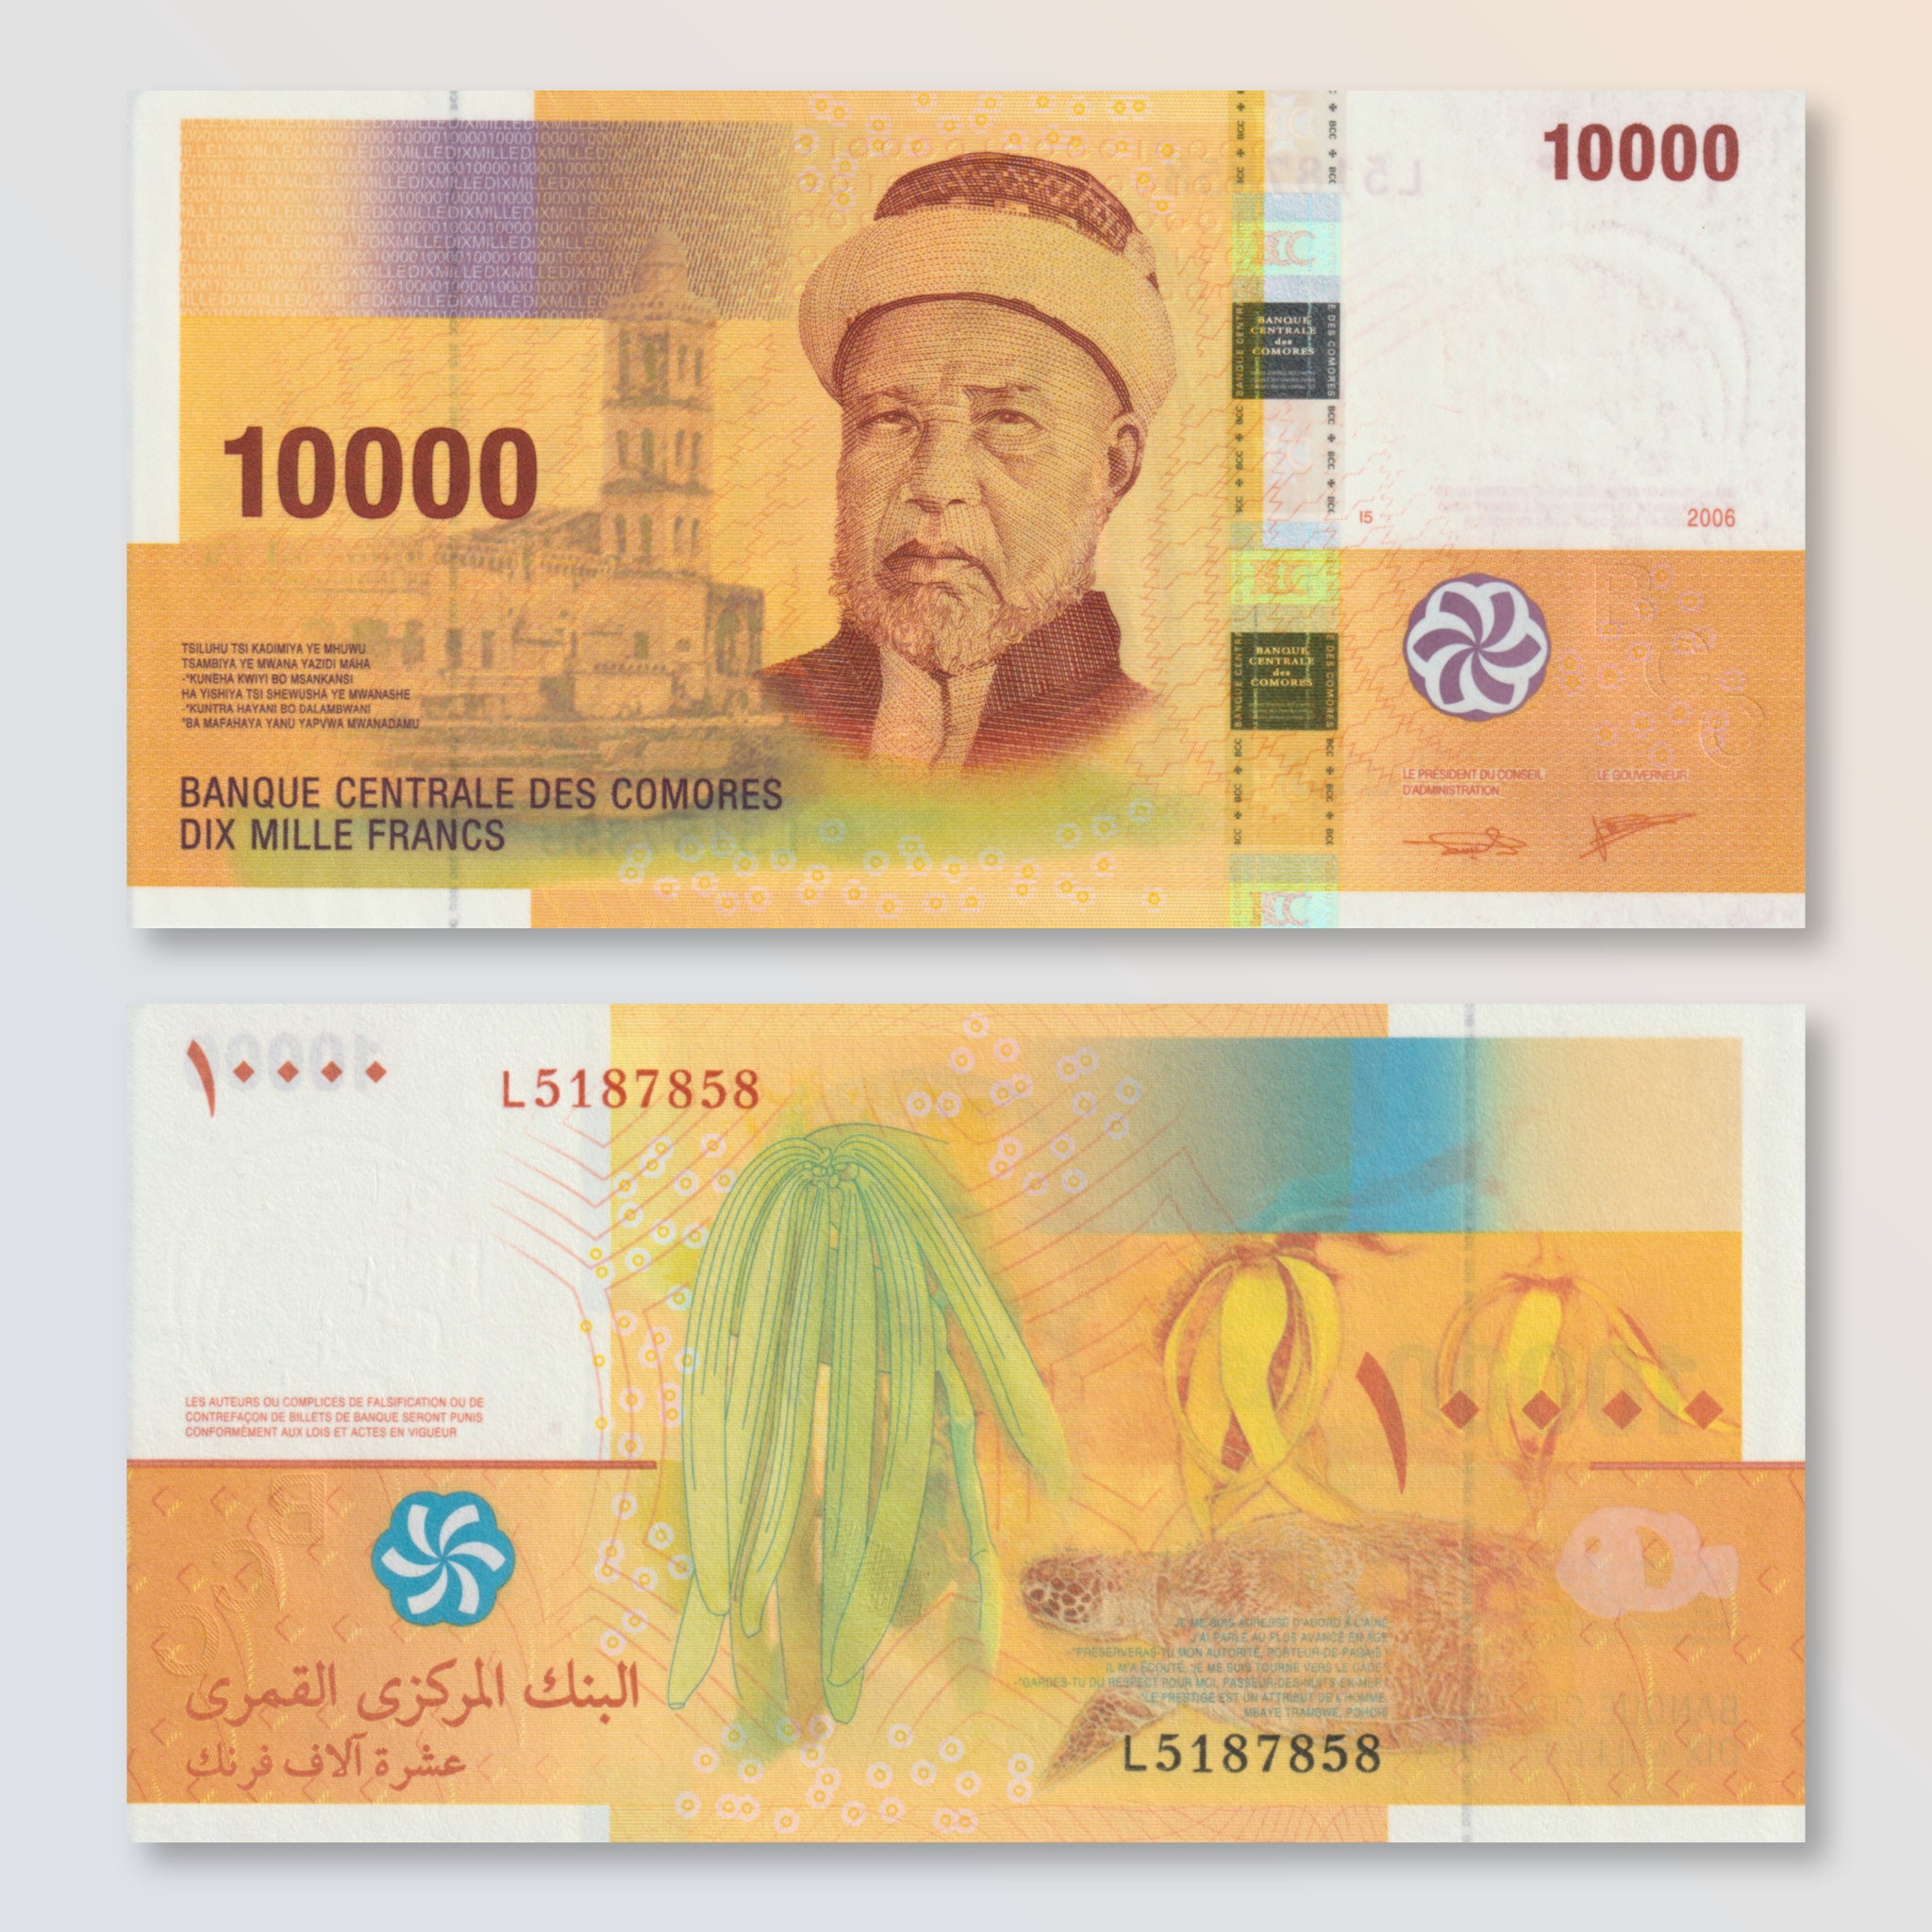 Comoros 10000 Francs, 2006, B310c, P19, UNC - Robert's World Money - World Banknotes